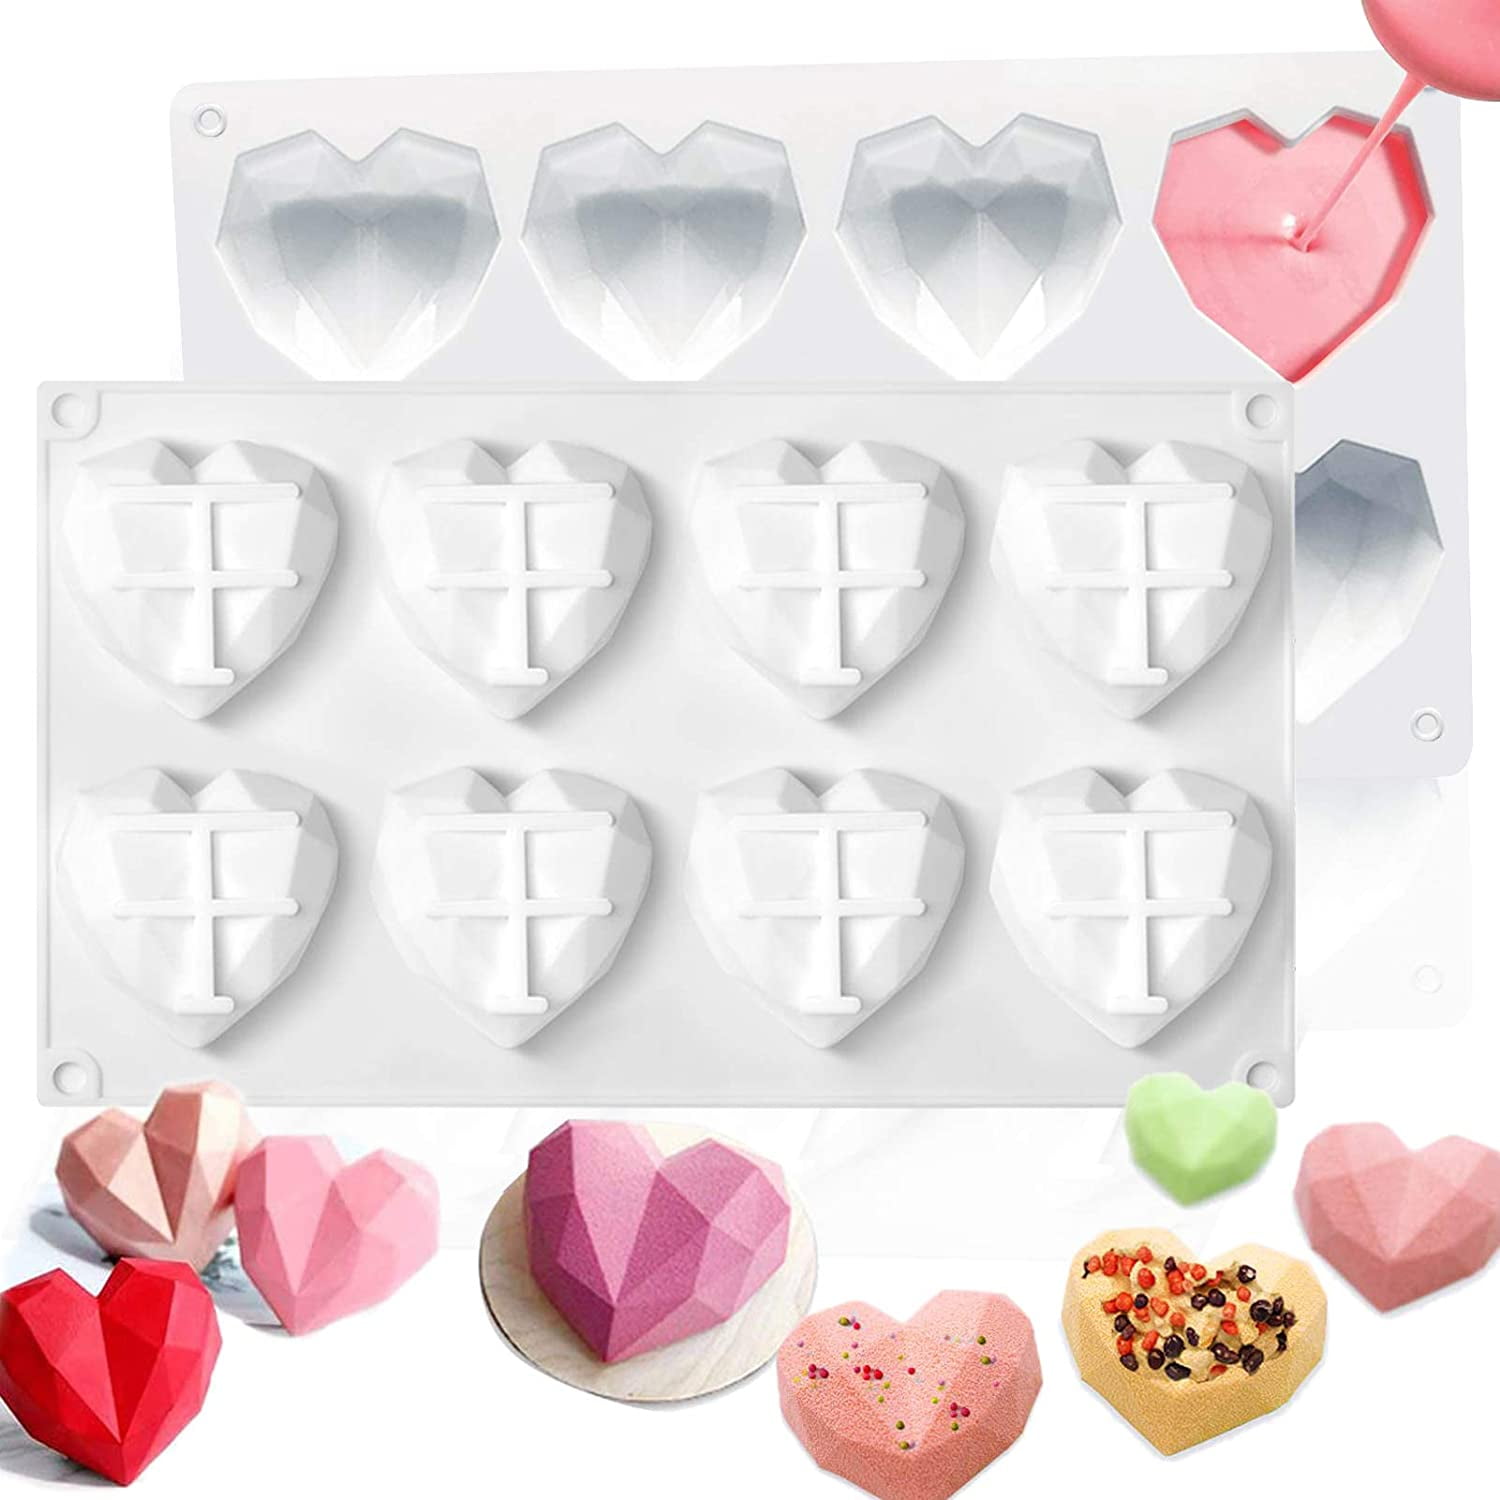 3D Heart Shape 3D Chocolates or Lollipops Silicone Mould